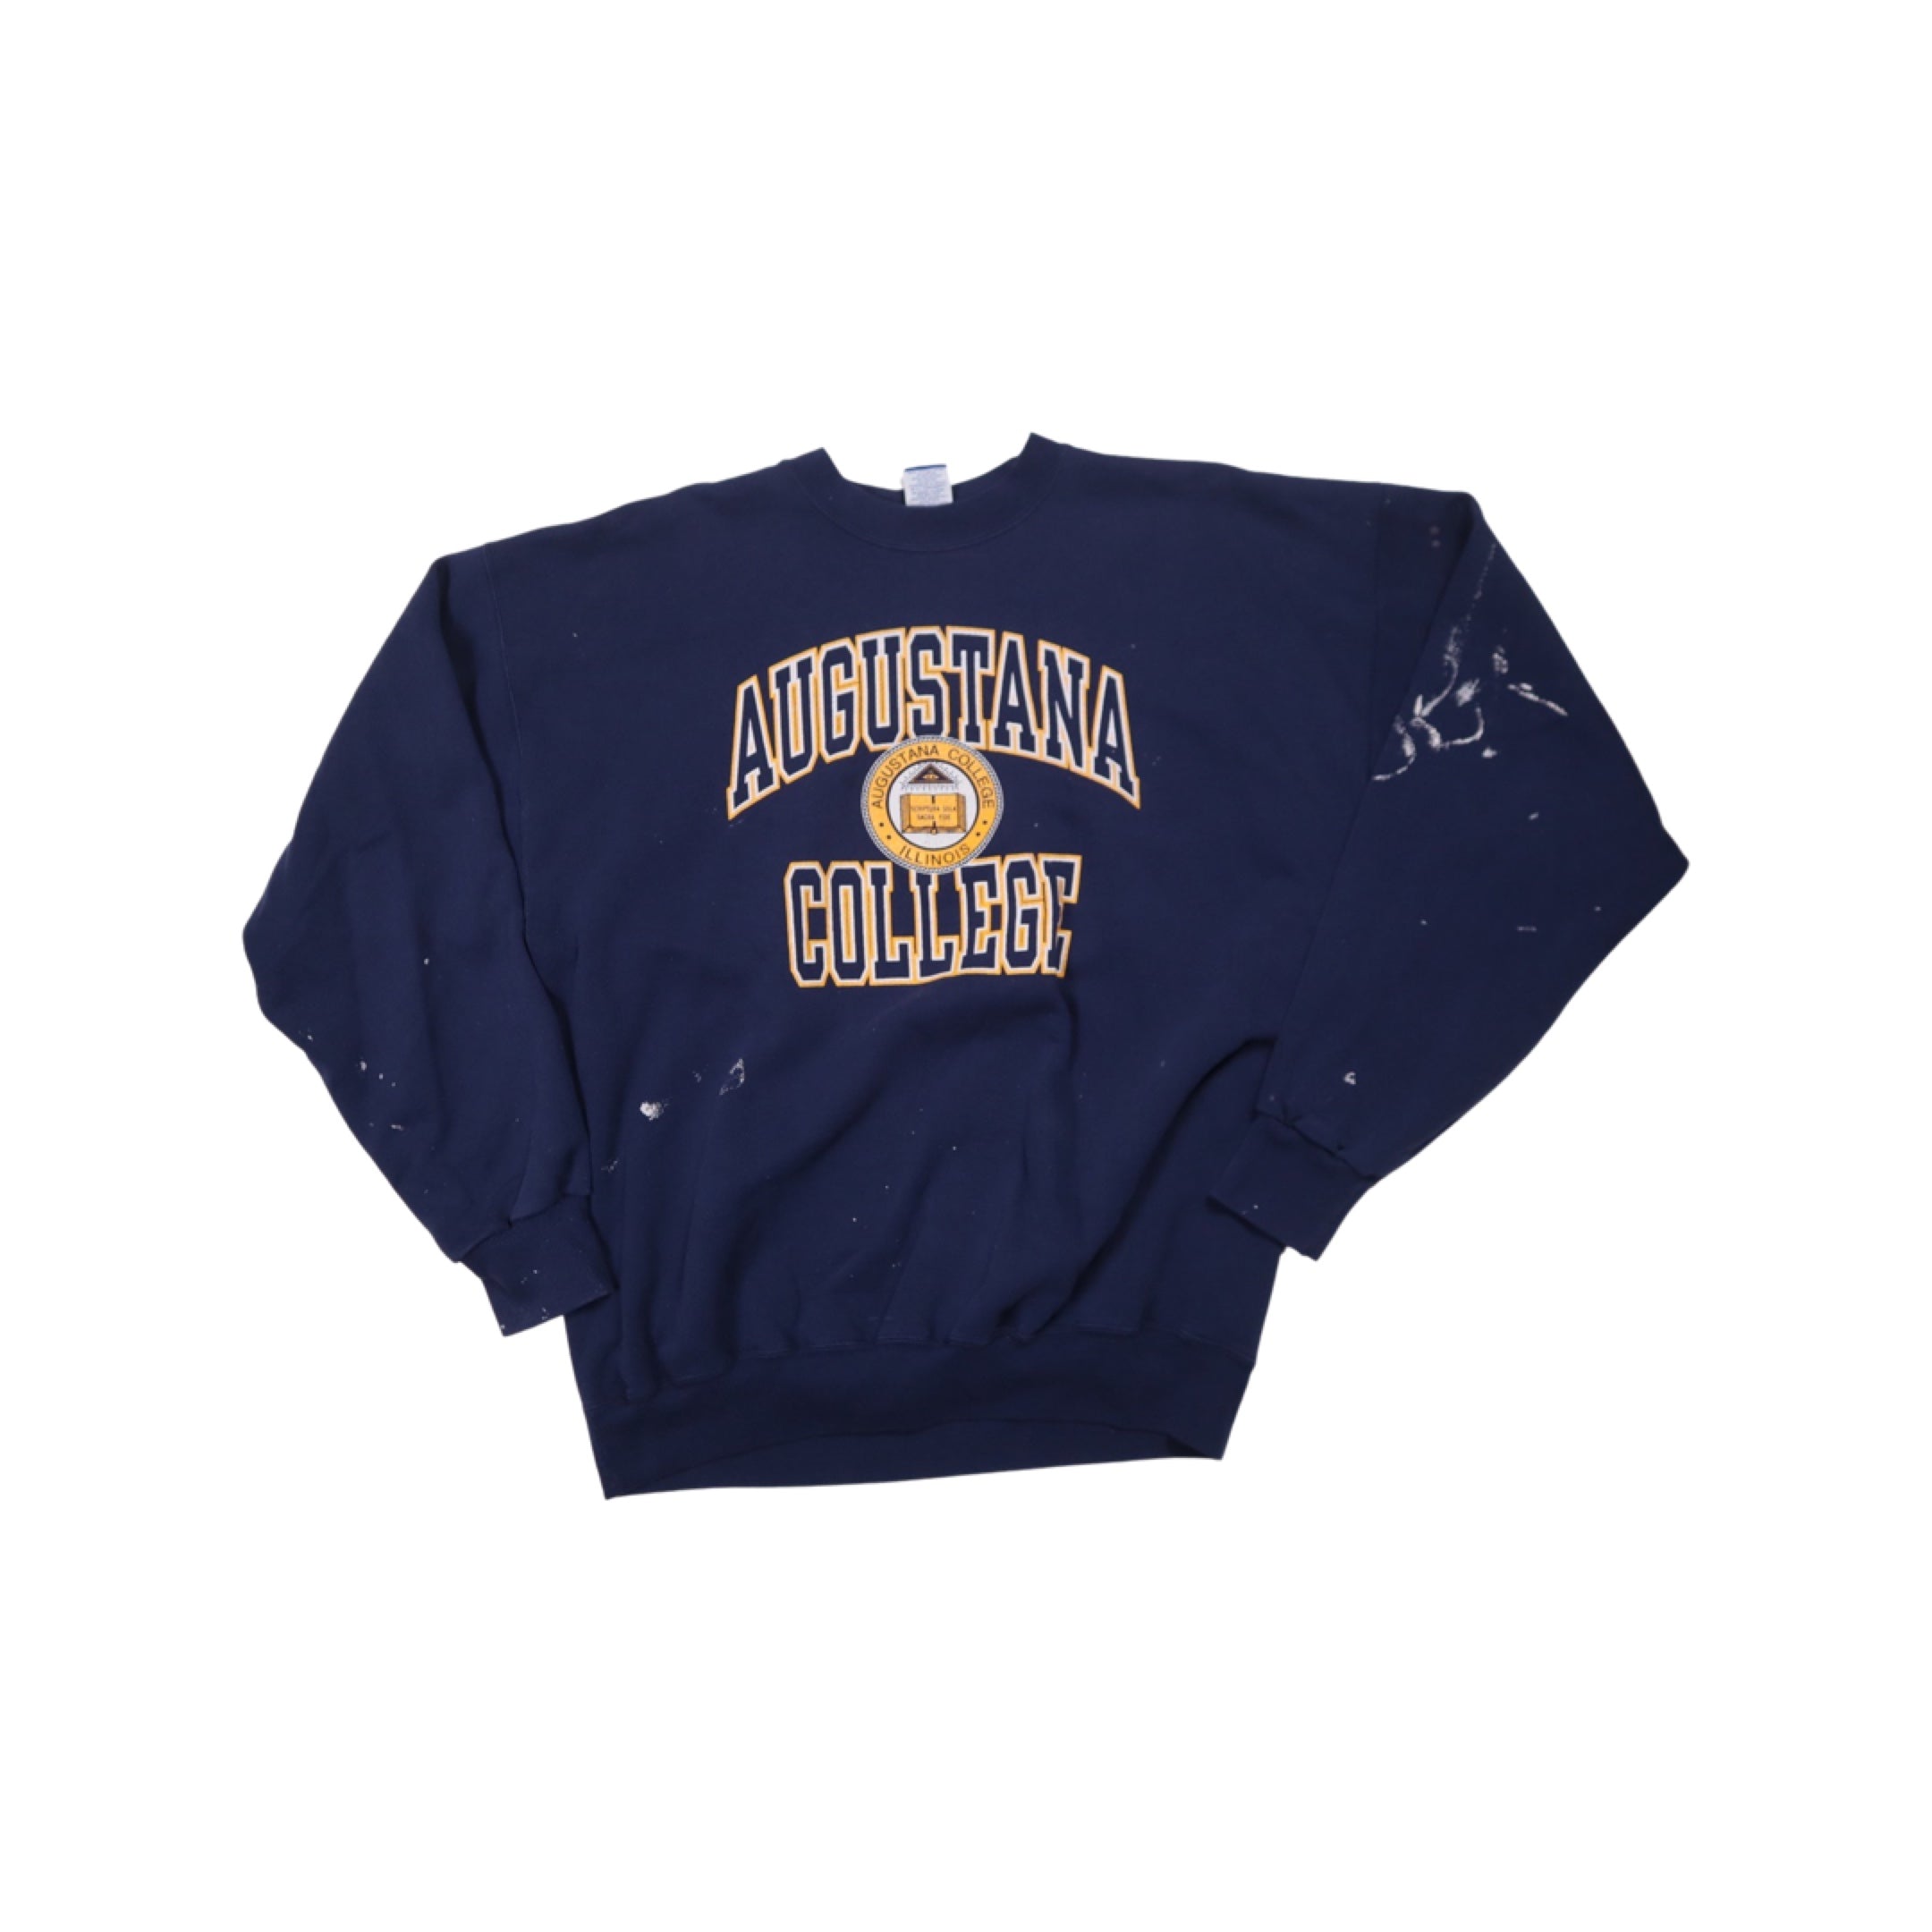 Augustana College 90s Champion Sweater (XL)